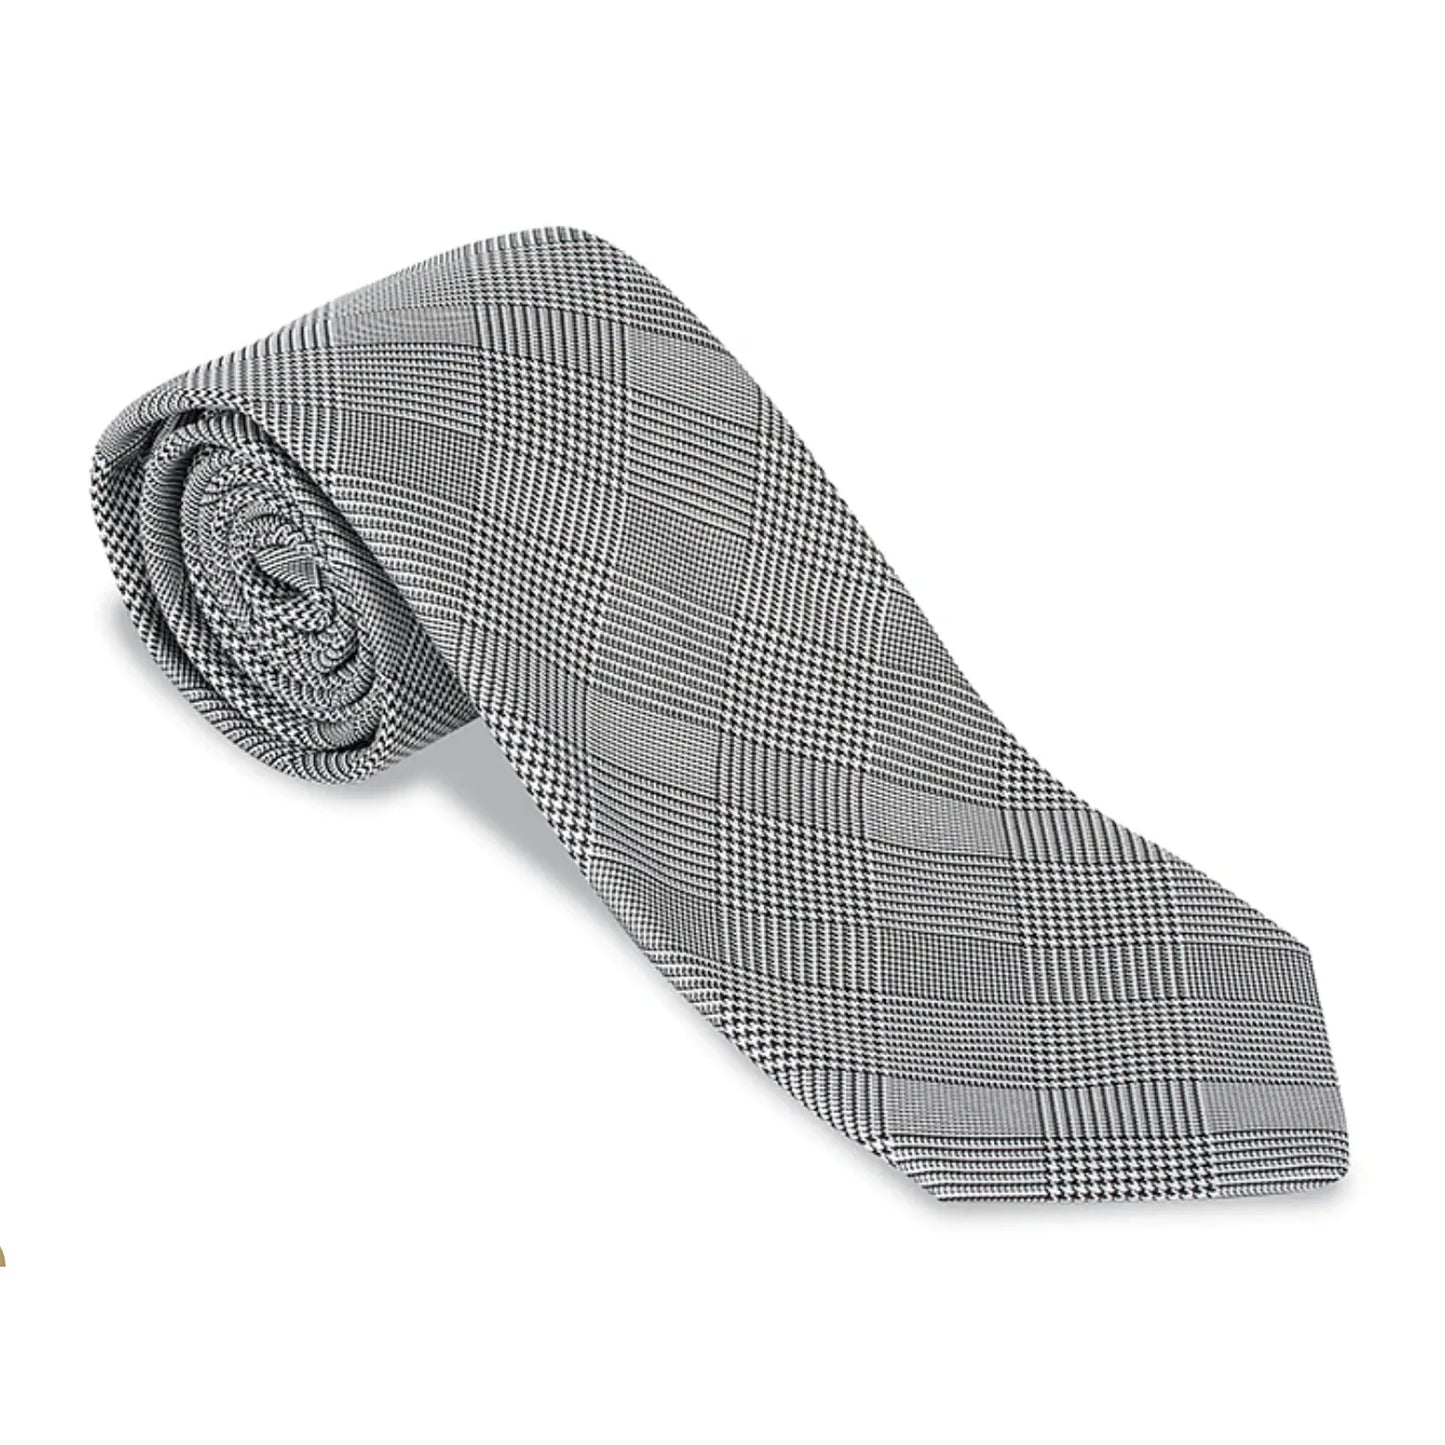 R Hanauer Tie - Gray/Silver with Glen Plaid Pattern